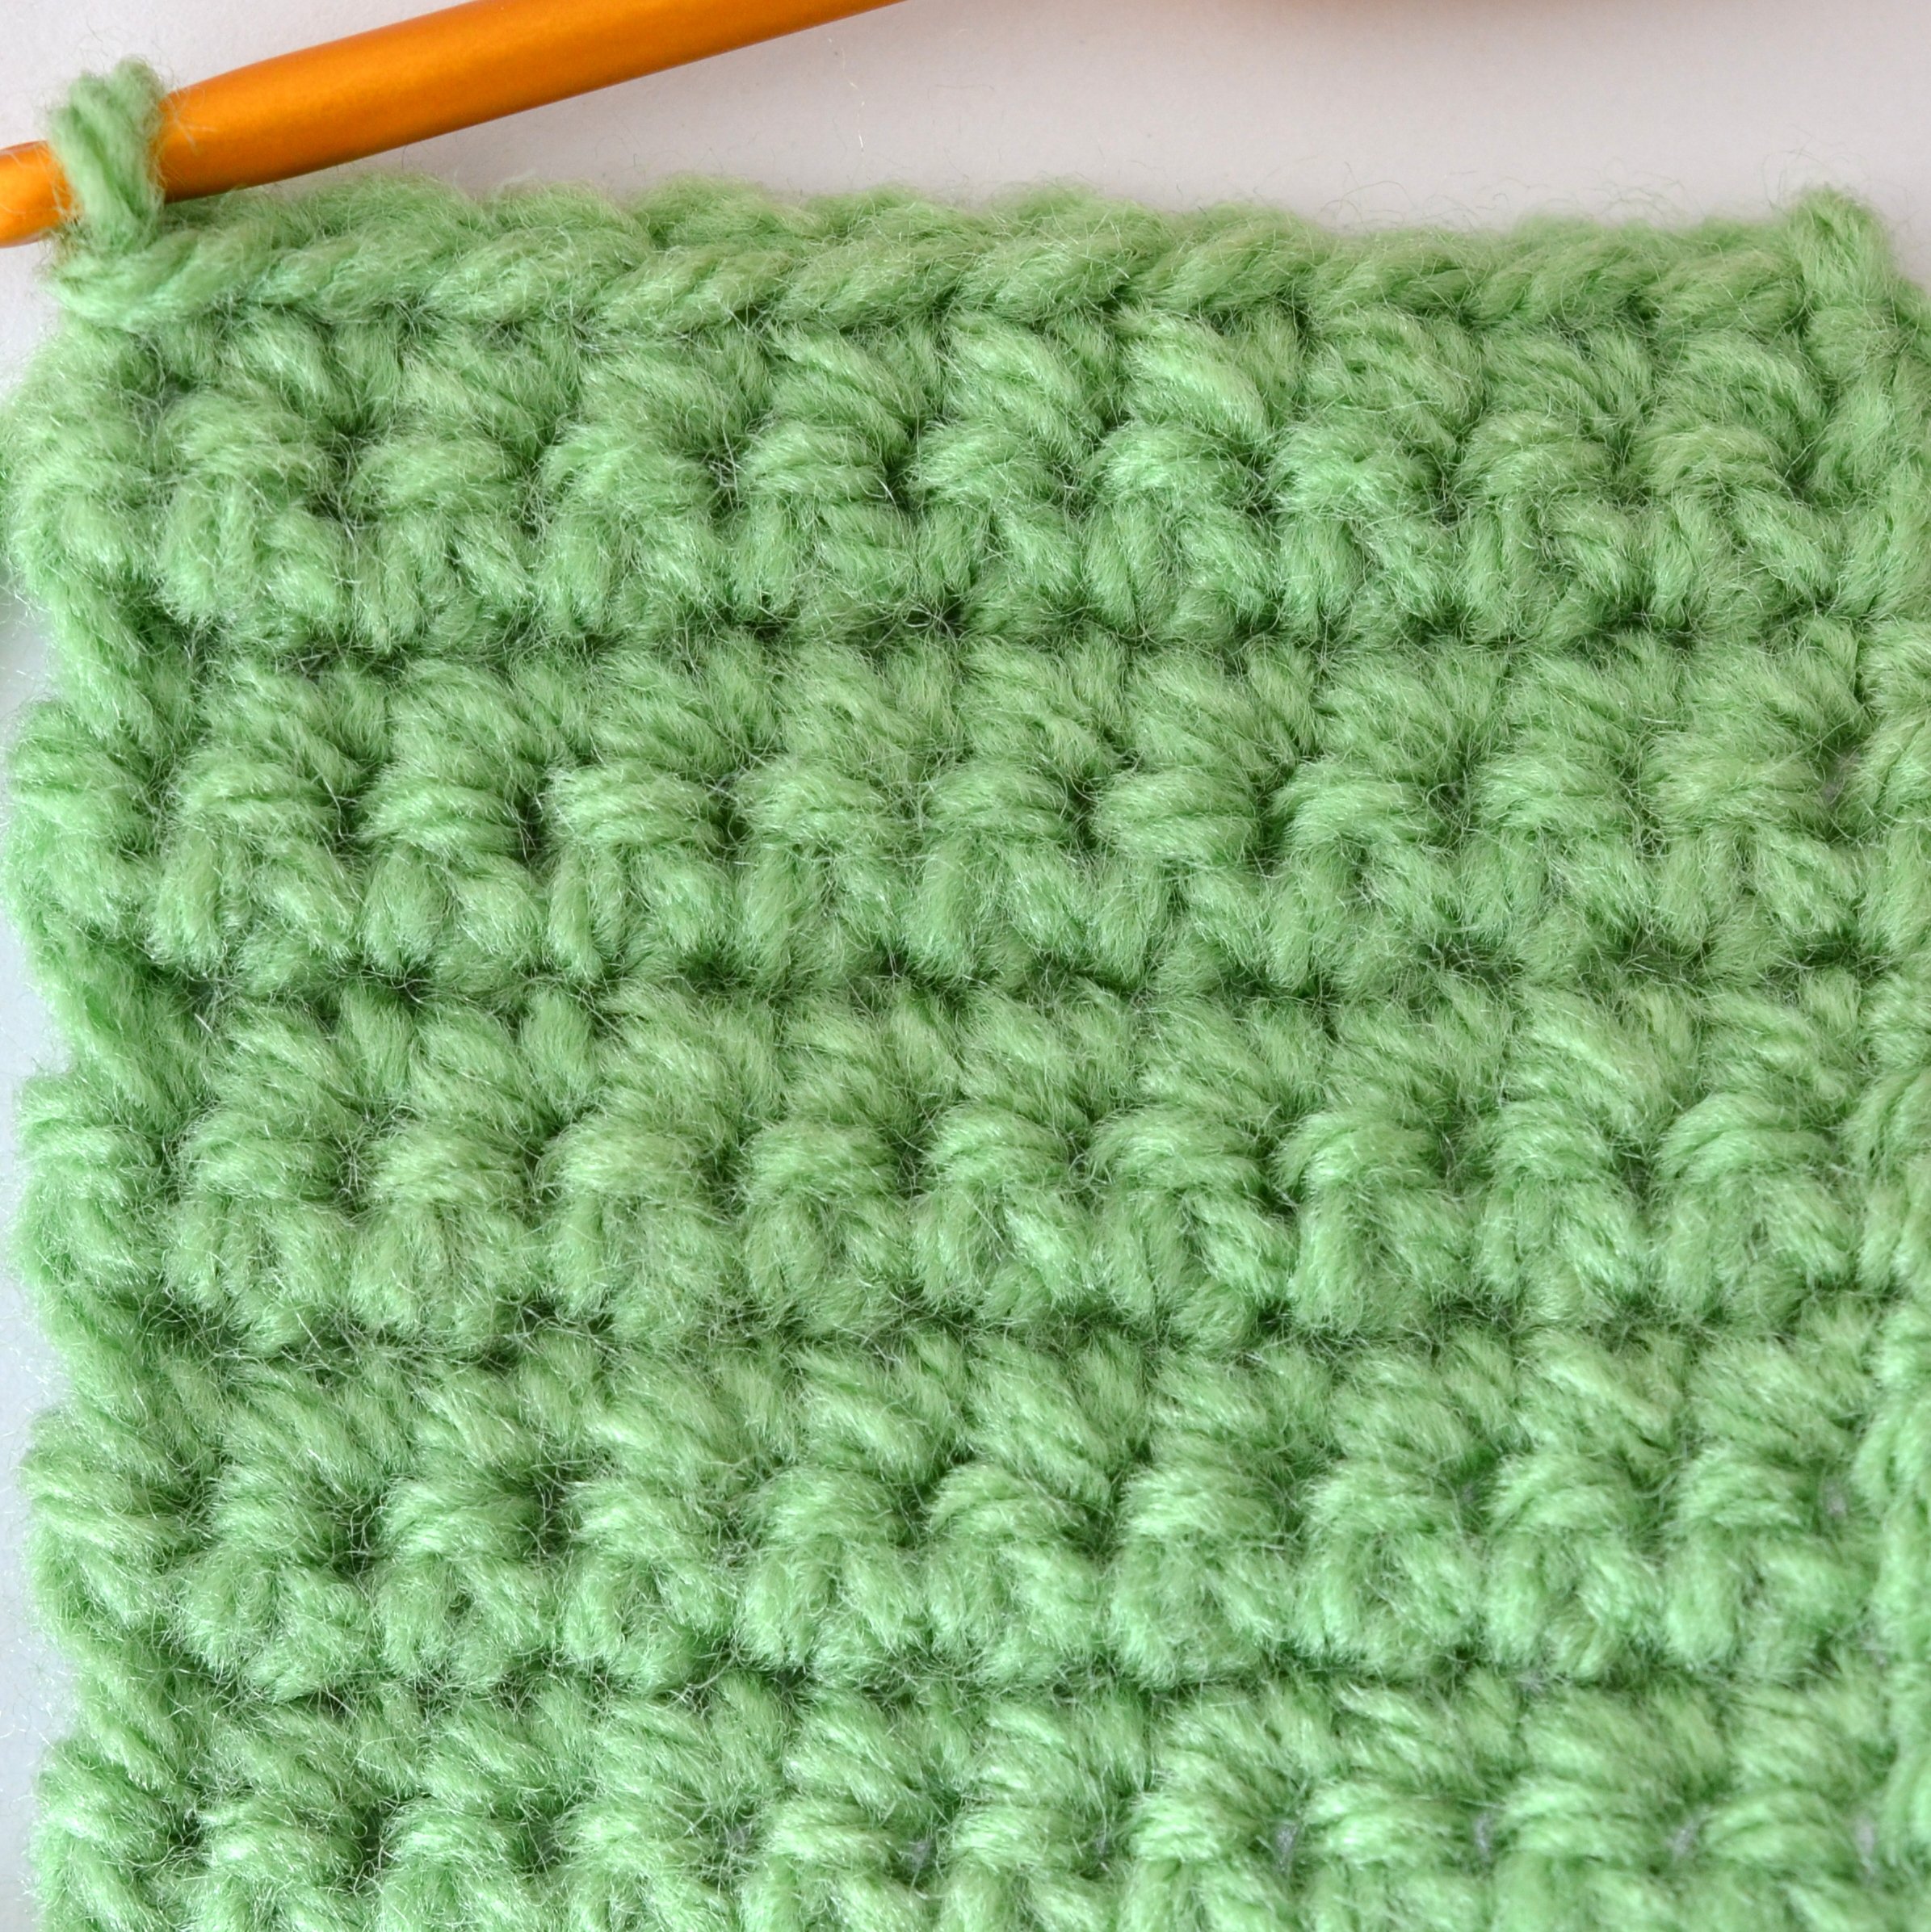 What is crochet? Beginner Crochet Basics — Pops de Milk - Fun and Nerdy  Crochet Patterns